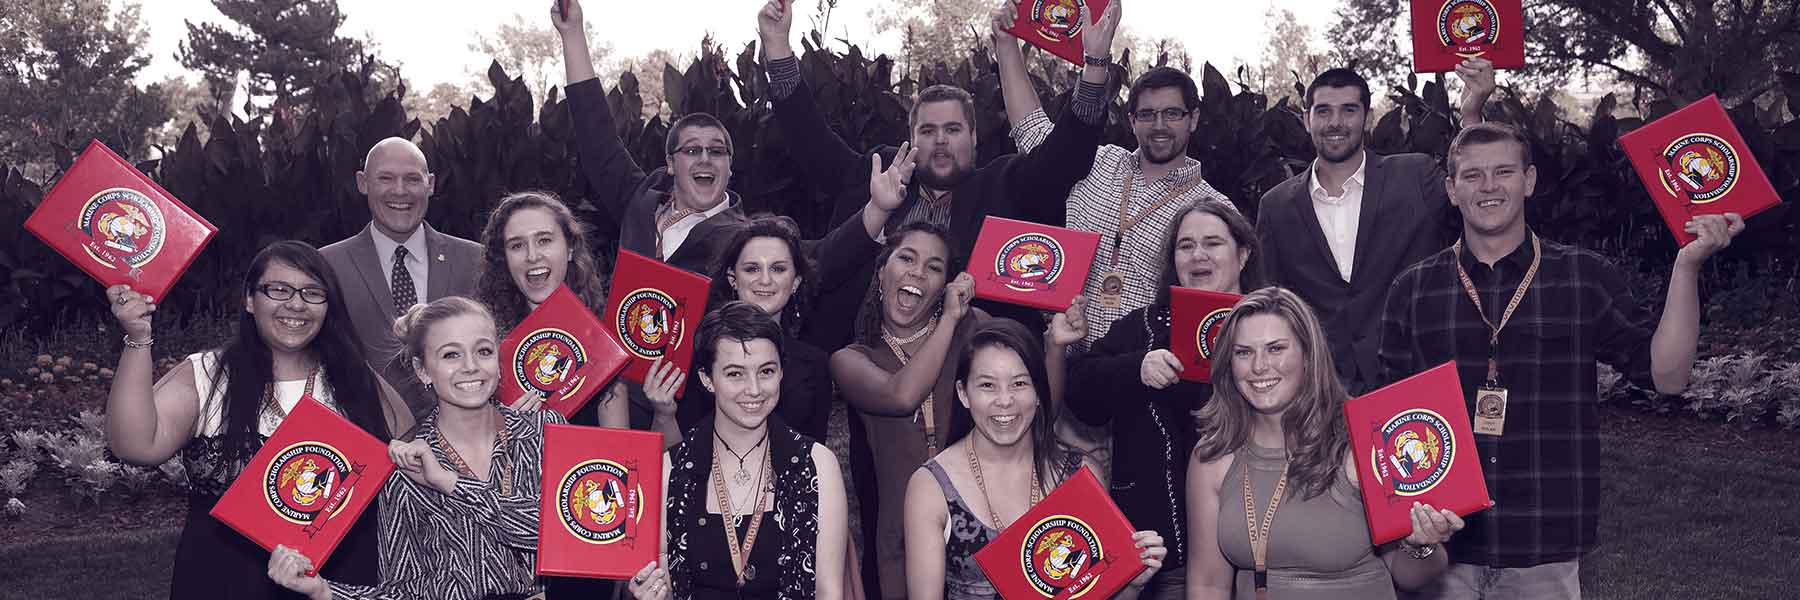 Marine Corps Scholarship Foundation - #TBT Last weekend